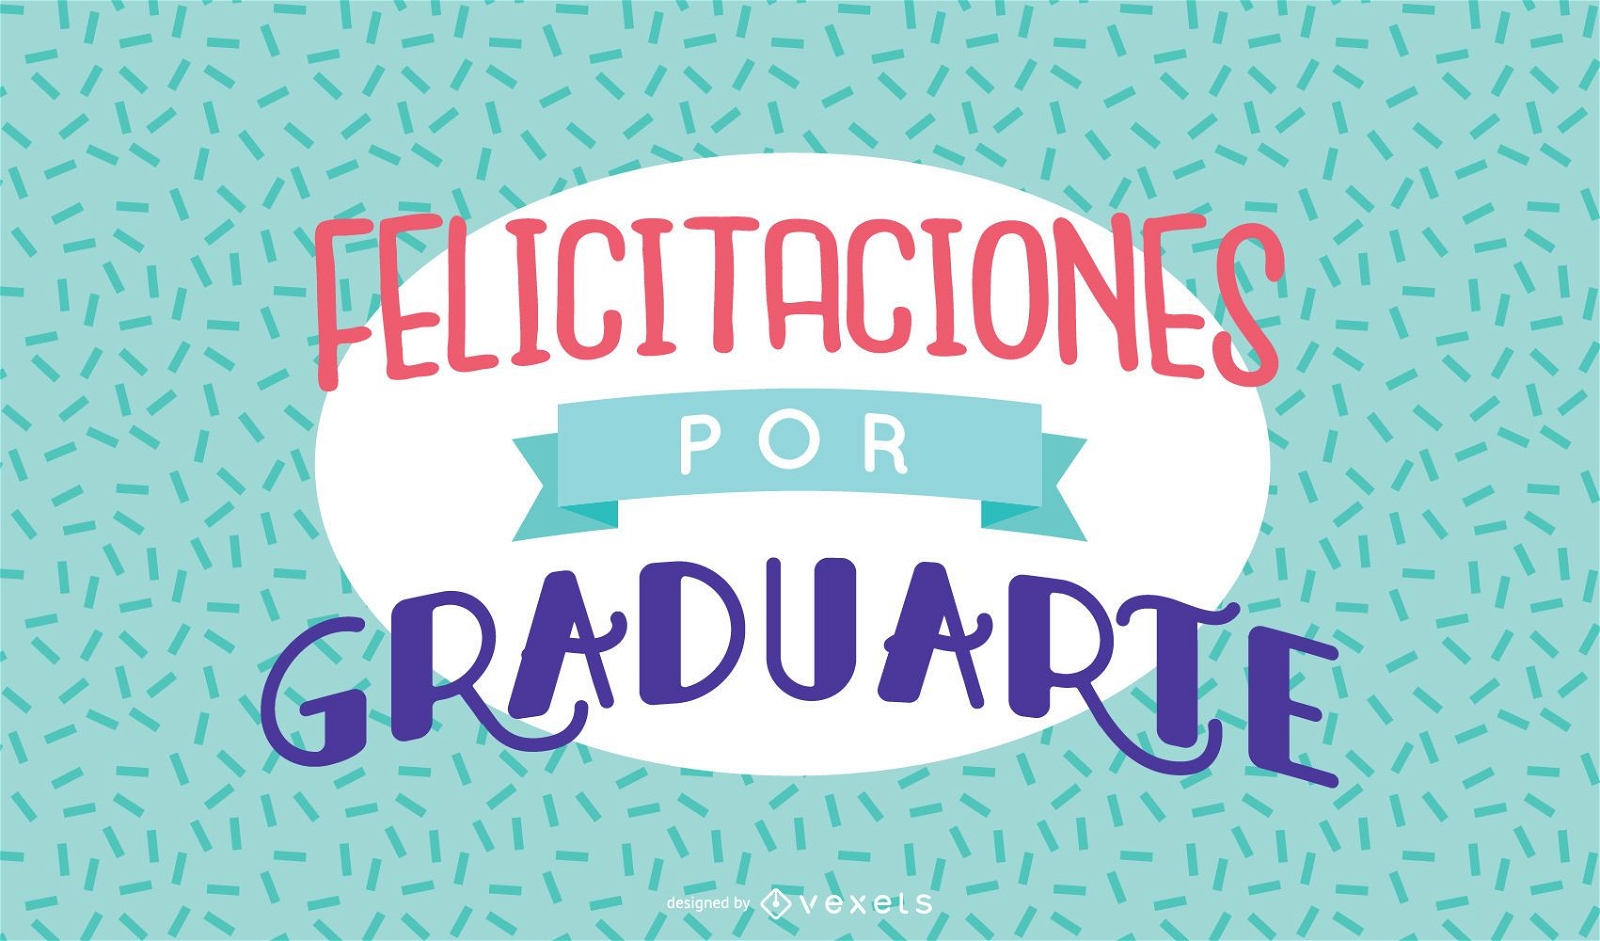 Glückwunschbotschaft zum spanischen Abschluss